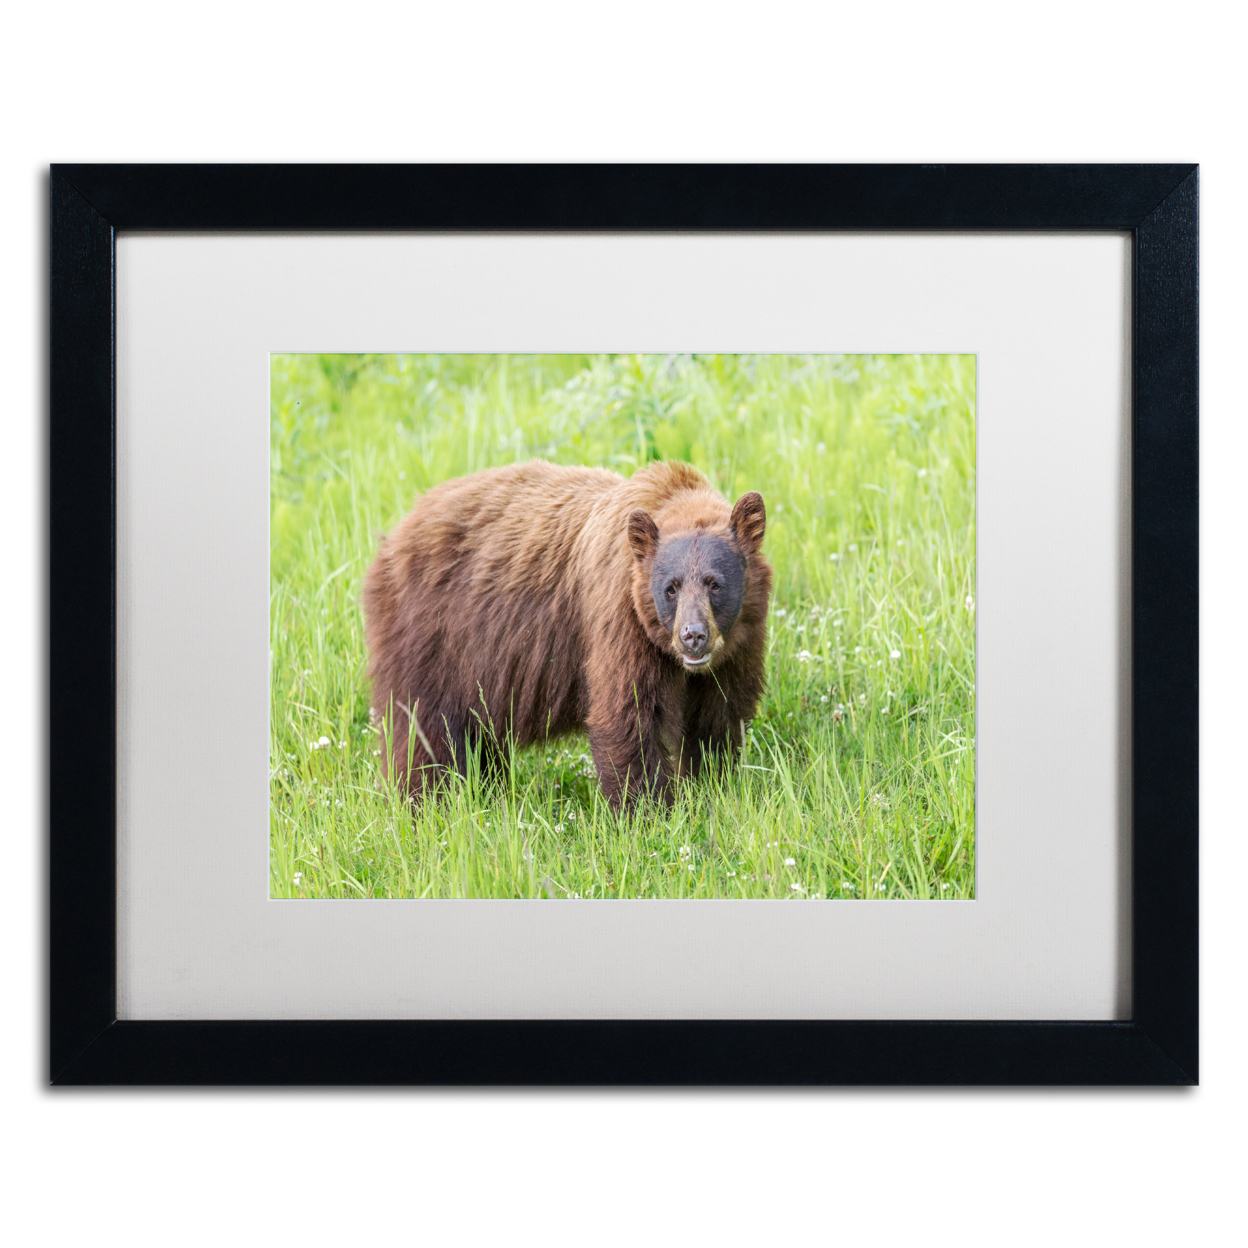 Pierre Leclerc 'Cinnamon Bear' Black Wooden Framed Art 18 X 22 Inches